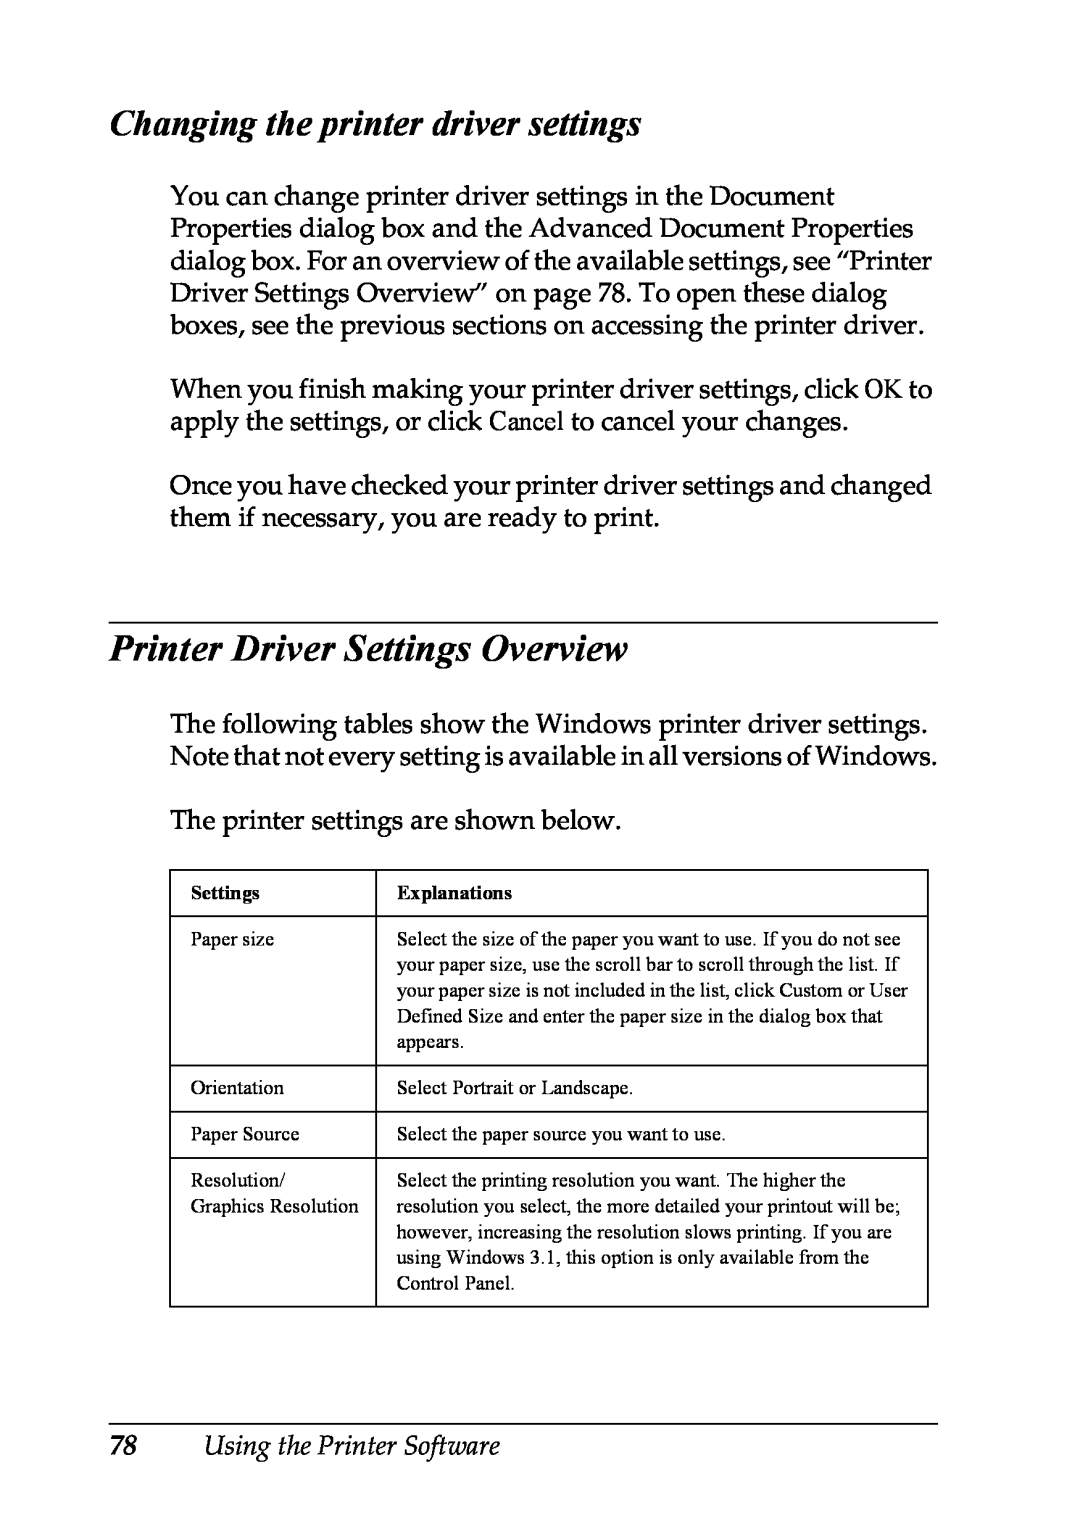 Epson LX-1170 manual Printer Driver Settings Overview, Changing the printer driver settings, Using the Printer Software 